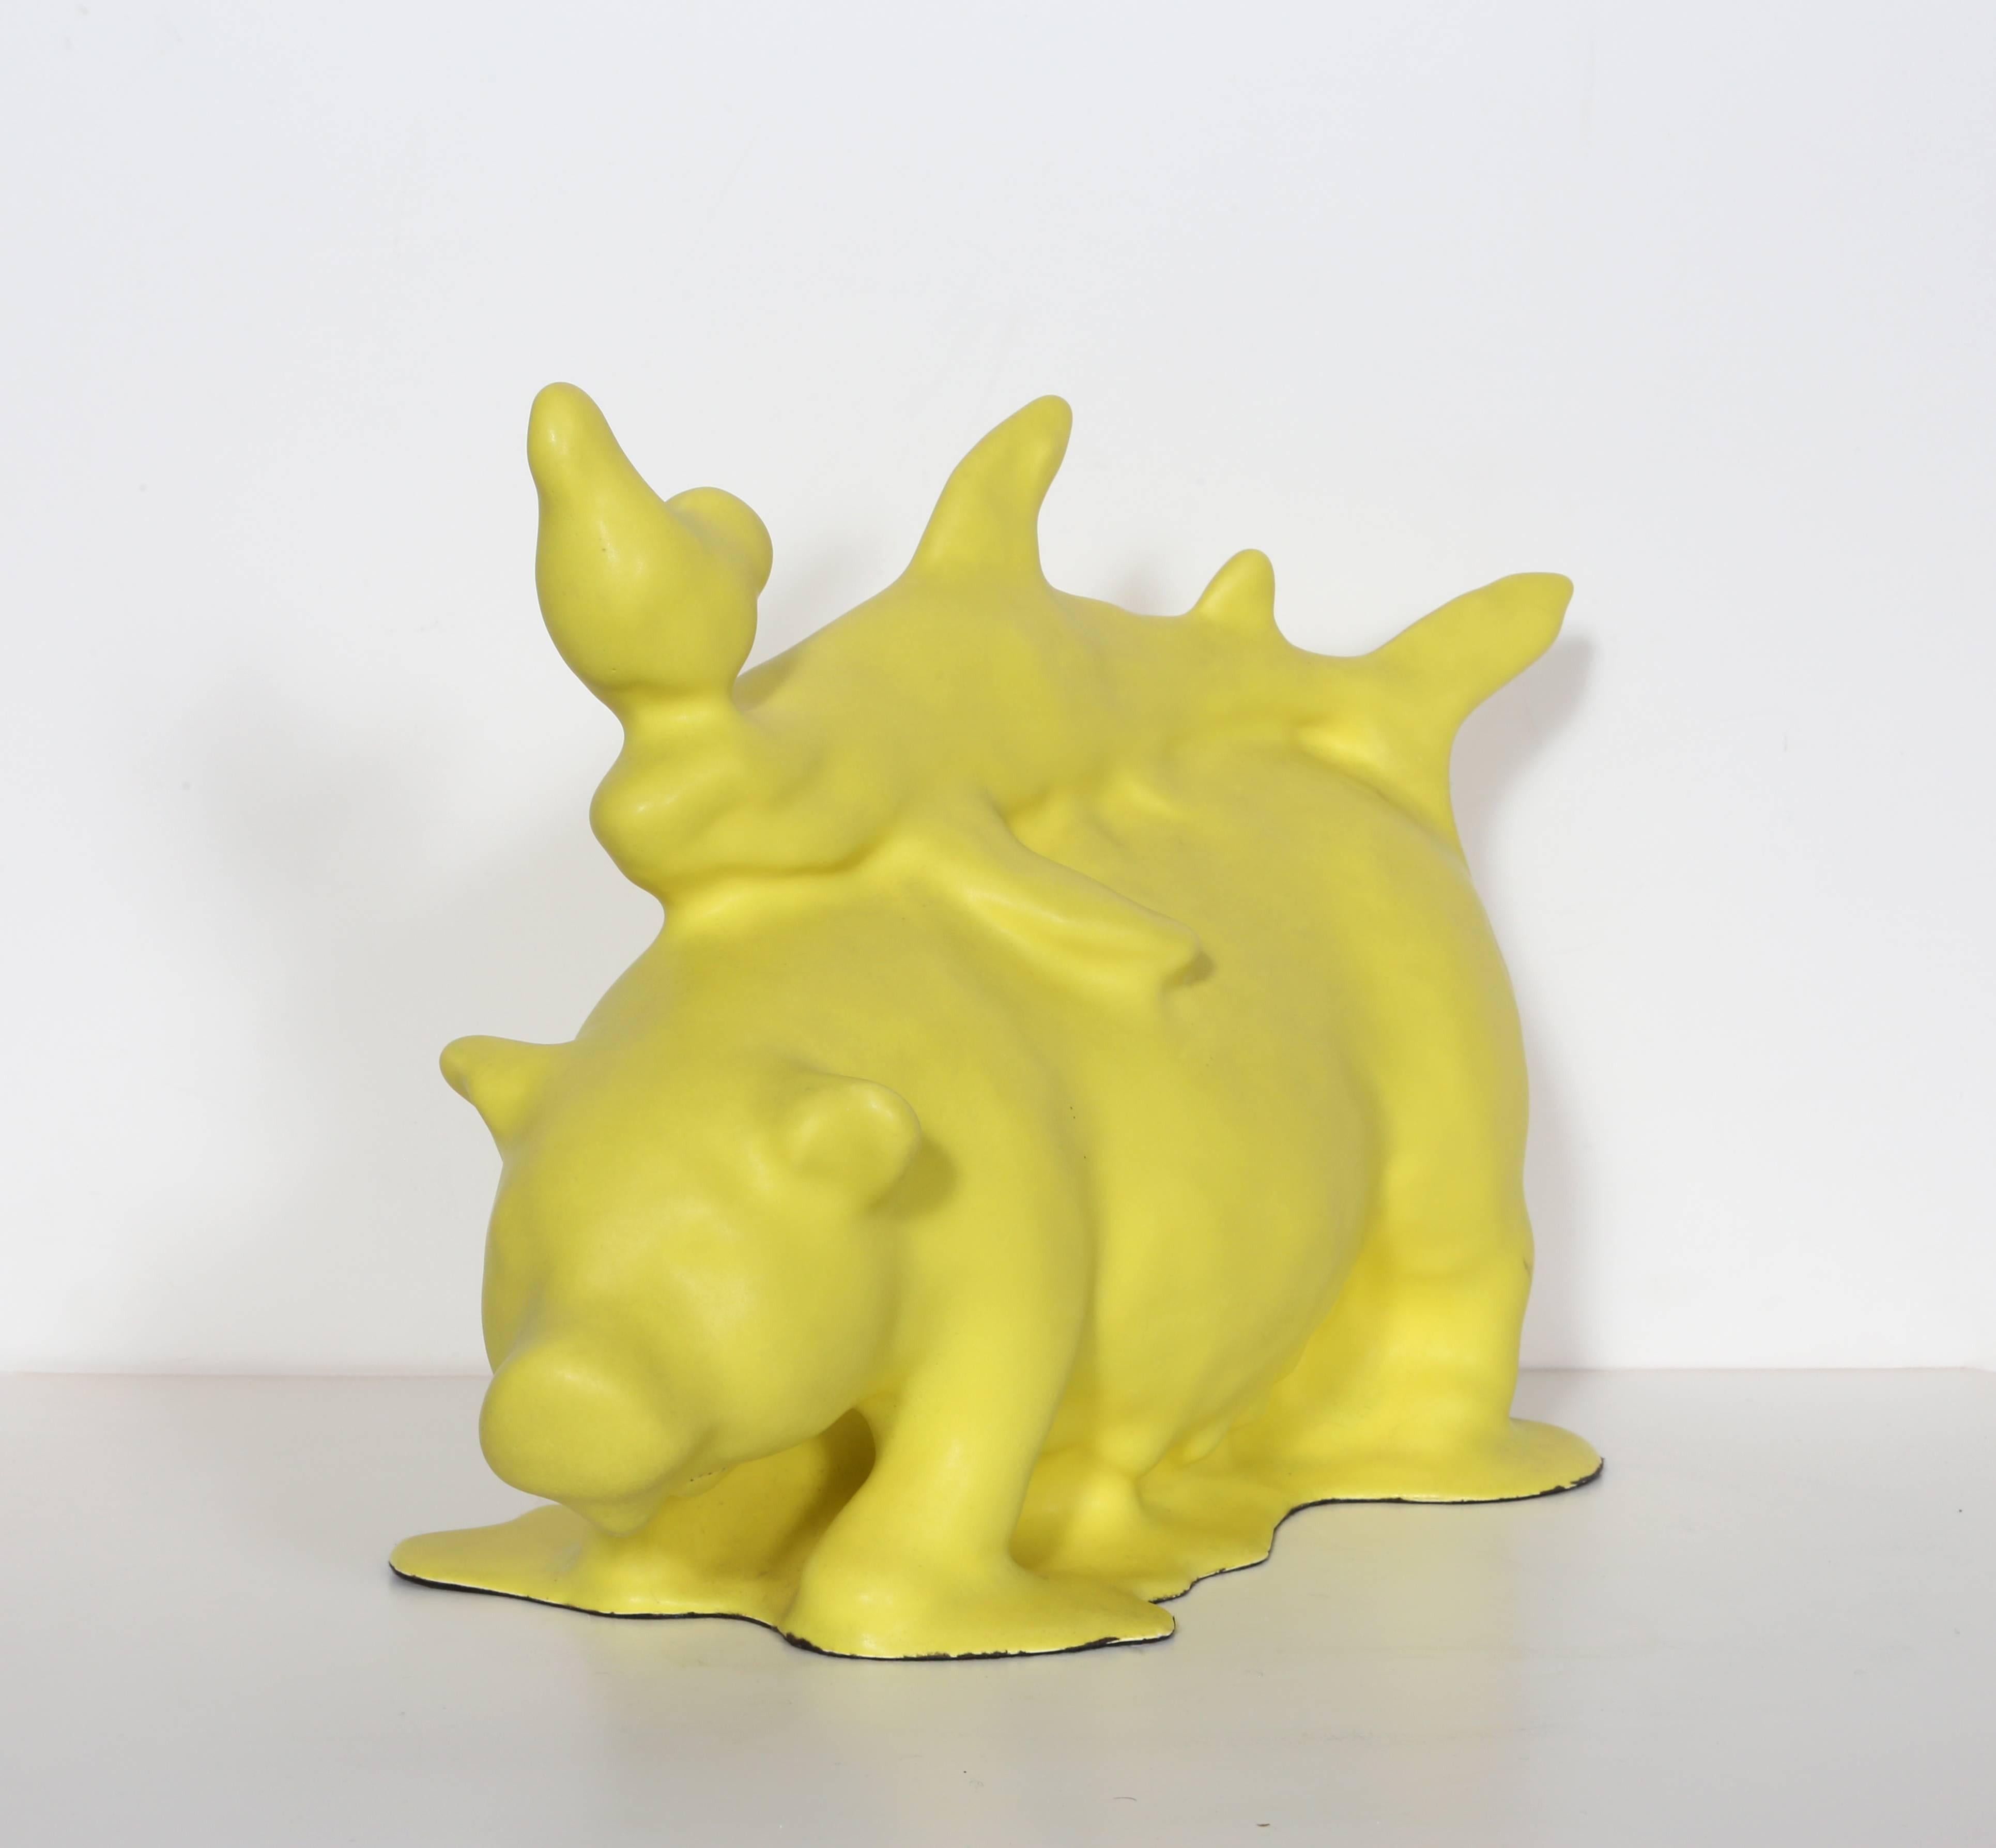 Pig, Shark, Chicken from The Gathering, Ceramic by Bertjan Pot